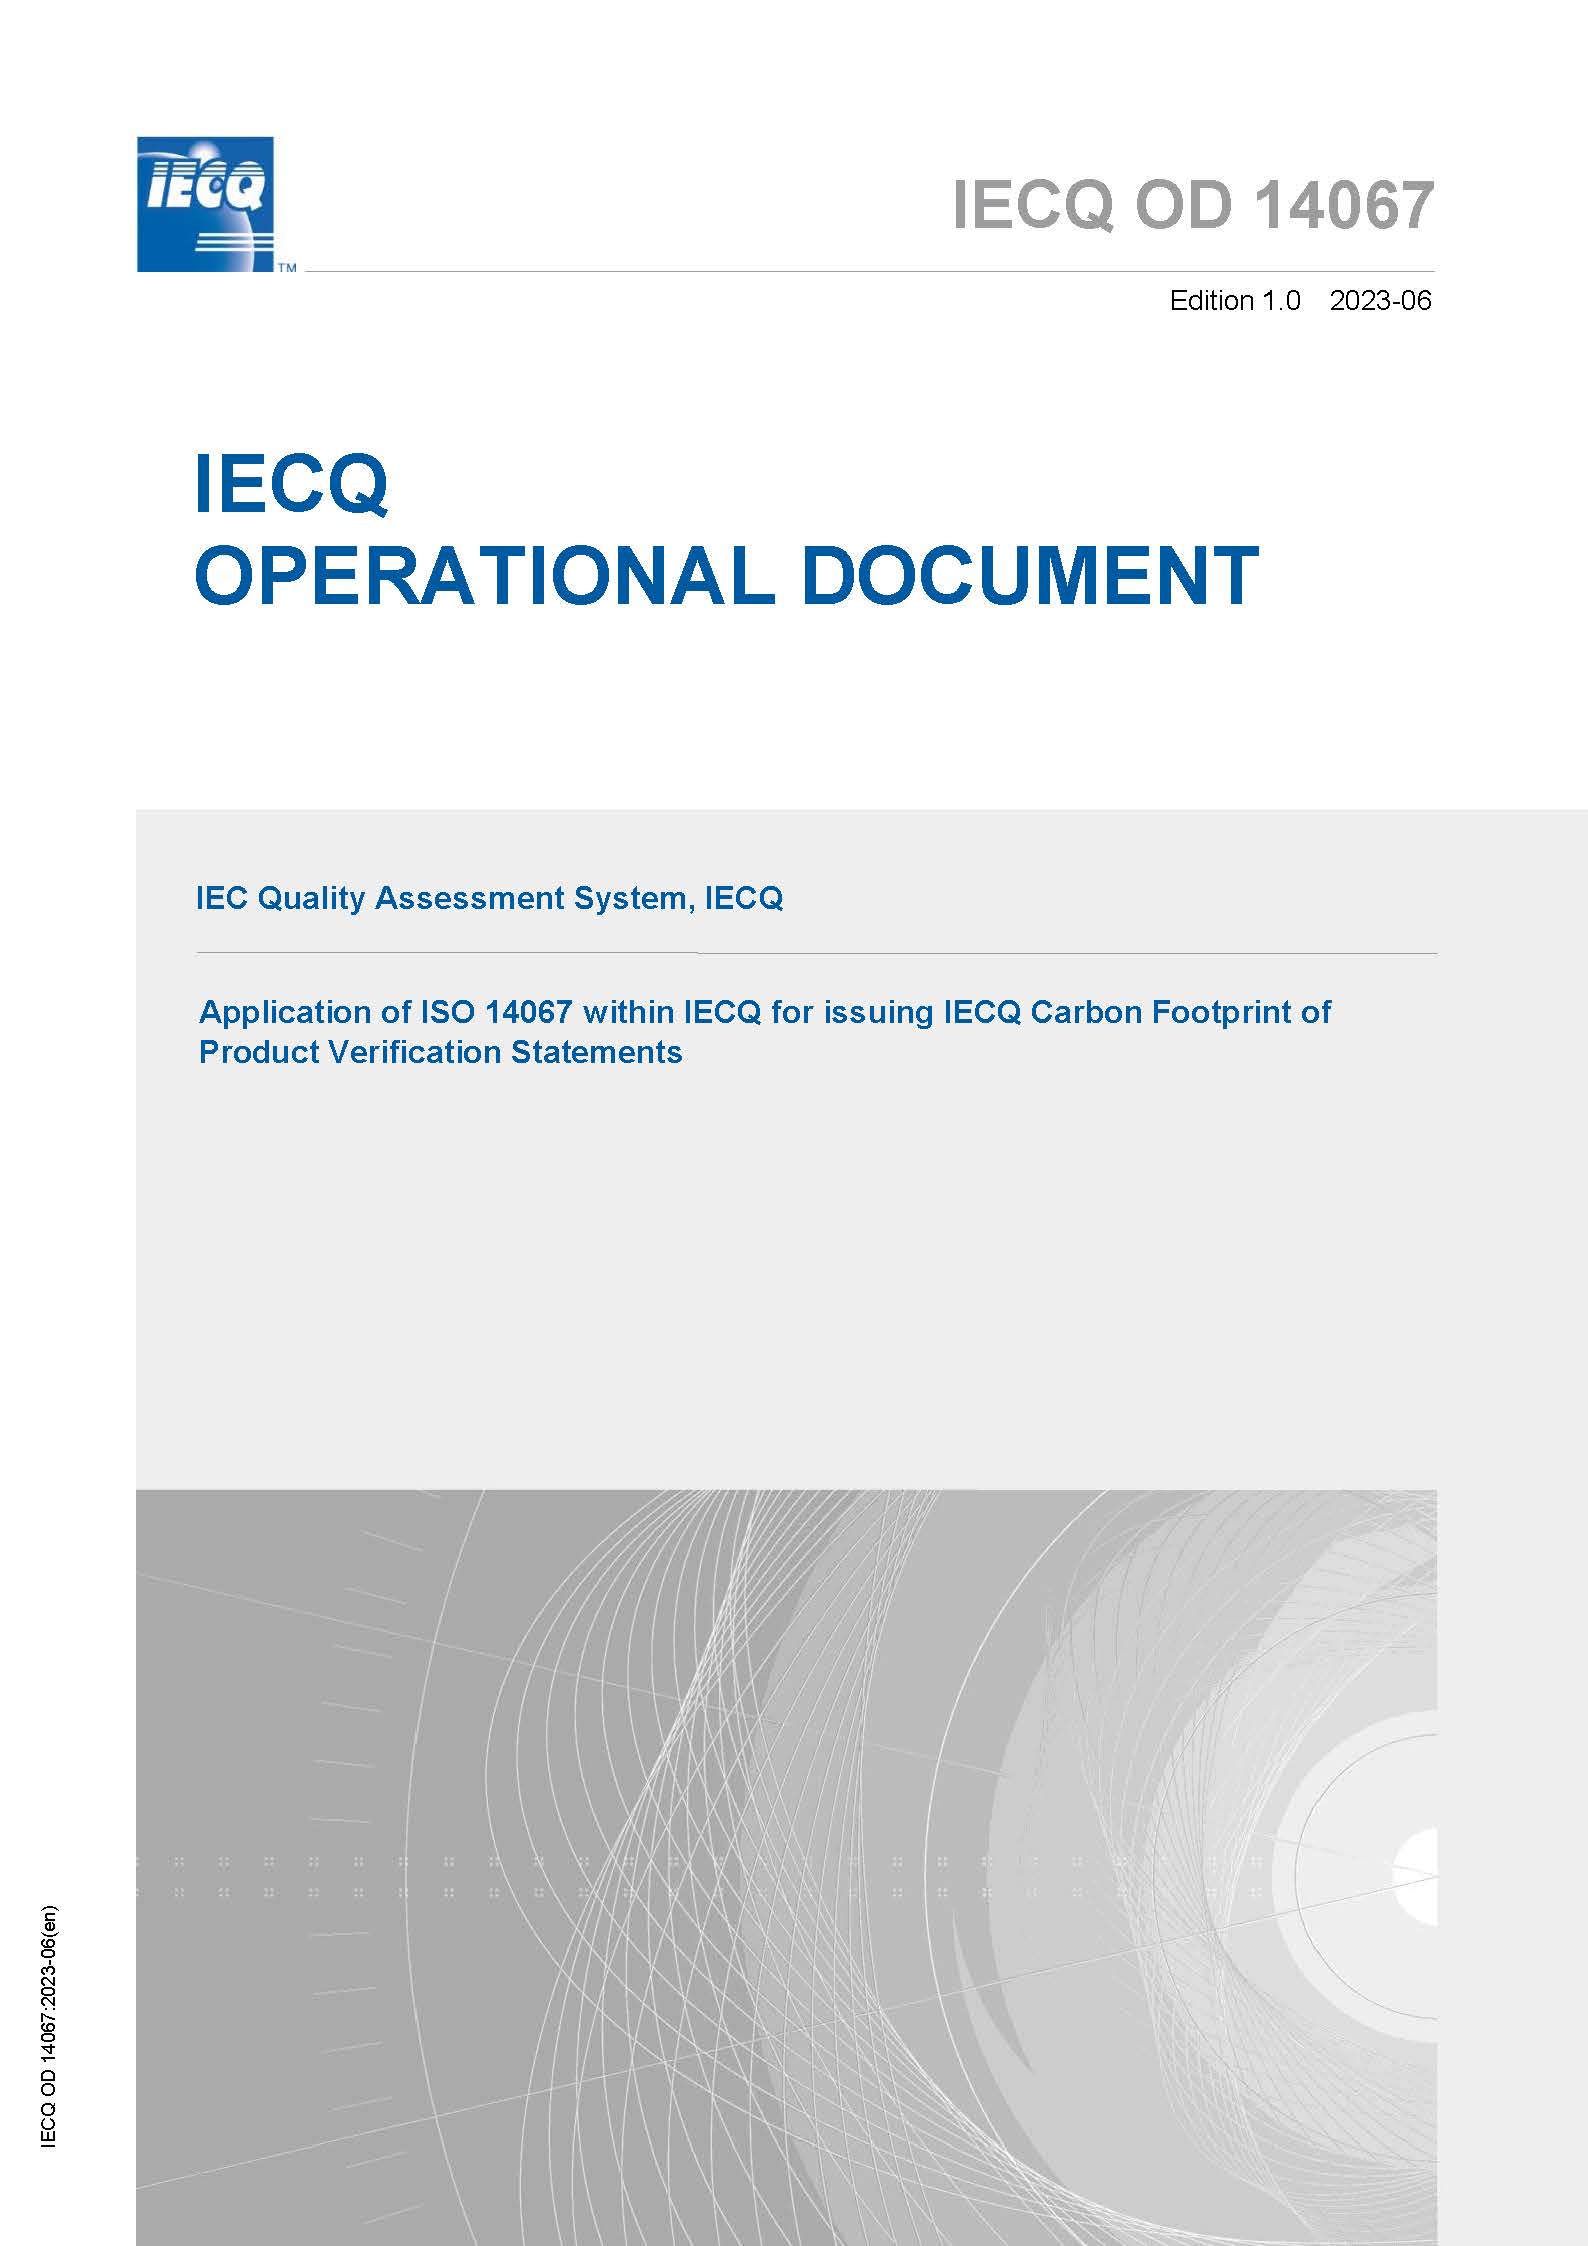 IECQ Rules of Procedure - Part 7: IECQ Counterfeit Avoidance Programme (IECQ AP-CAP) - Programme Requirements